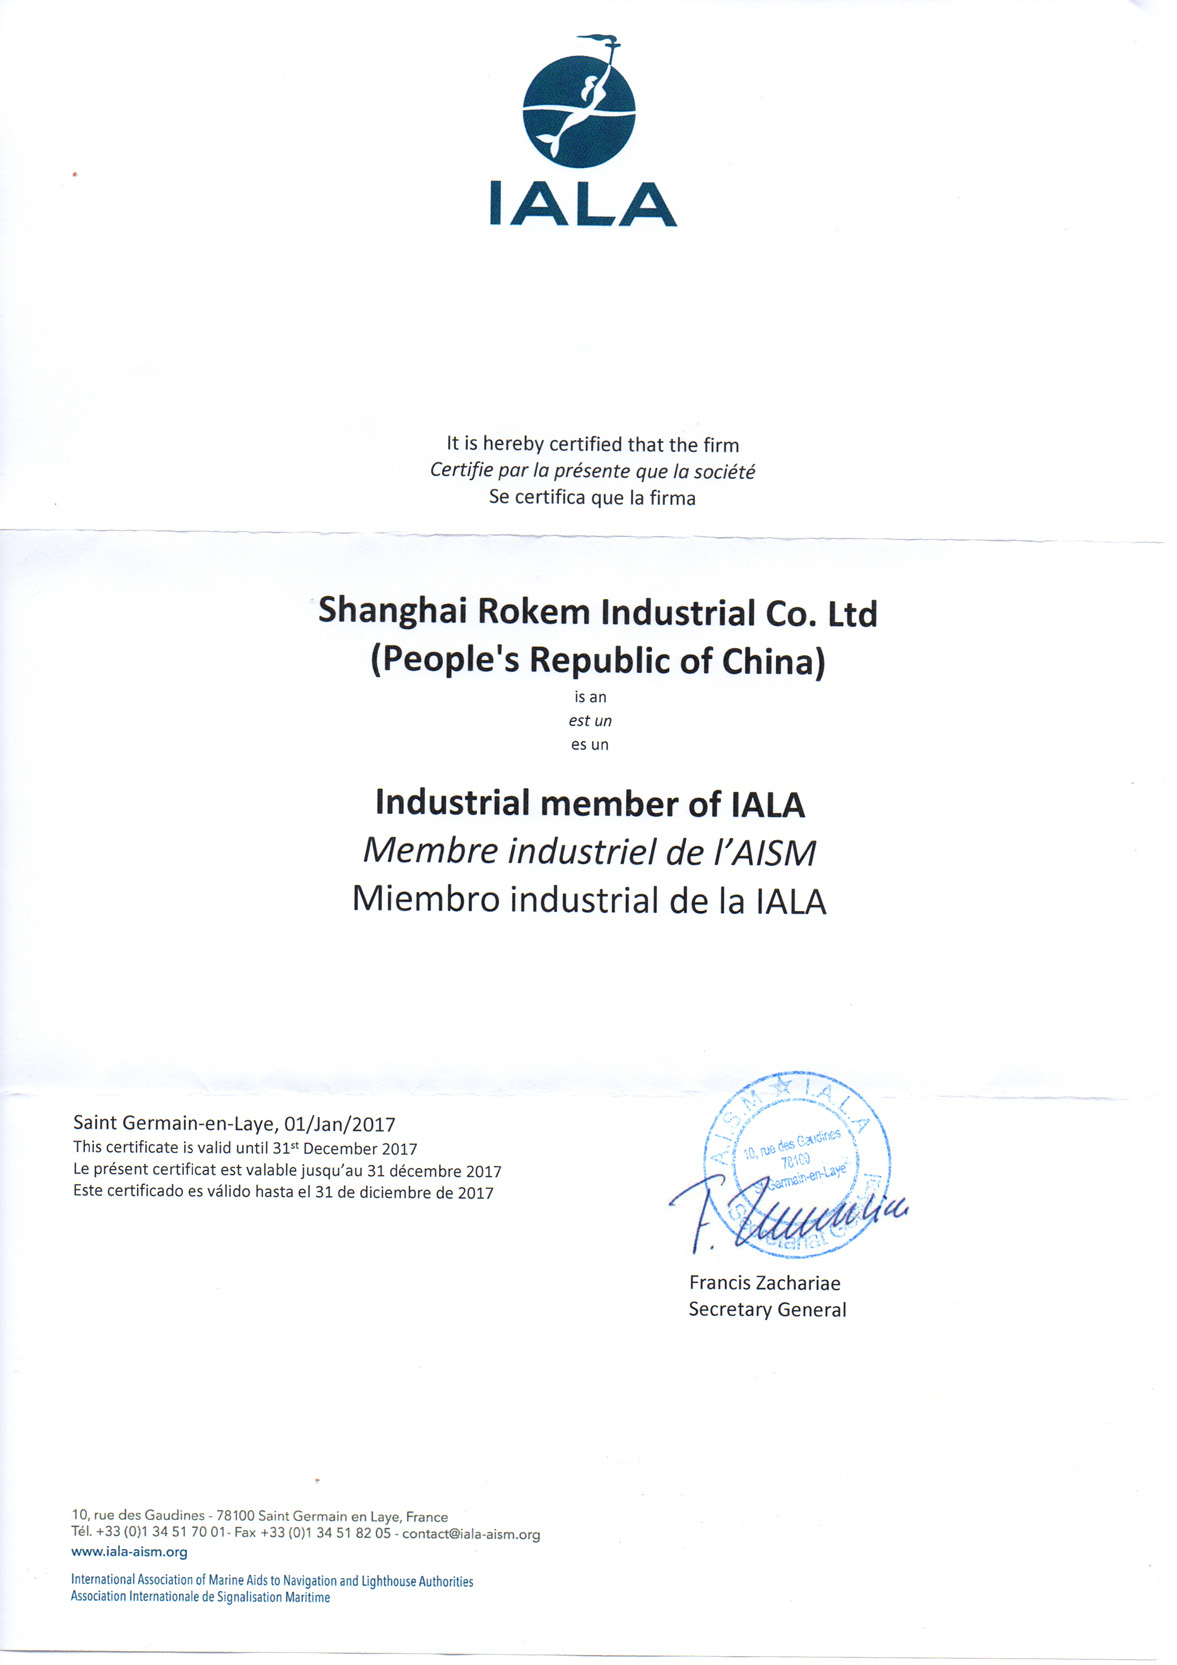 IALA certificate